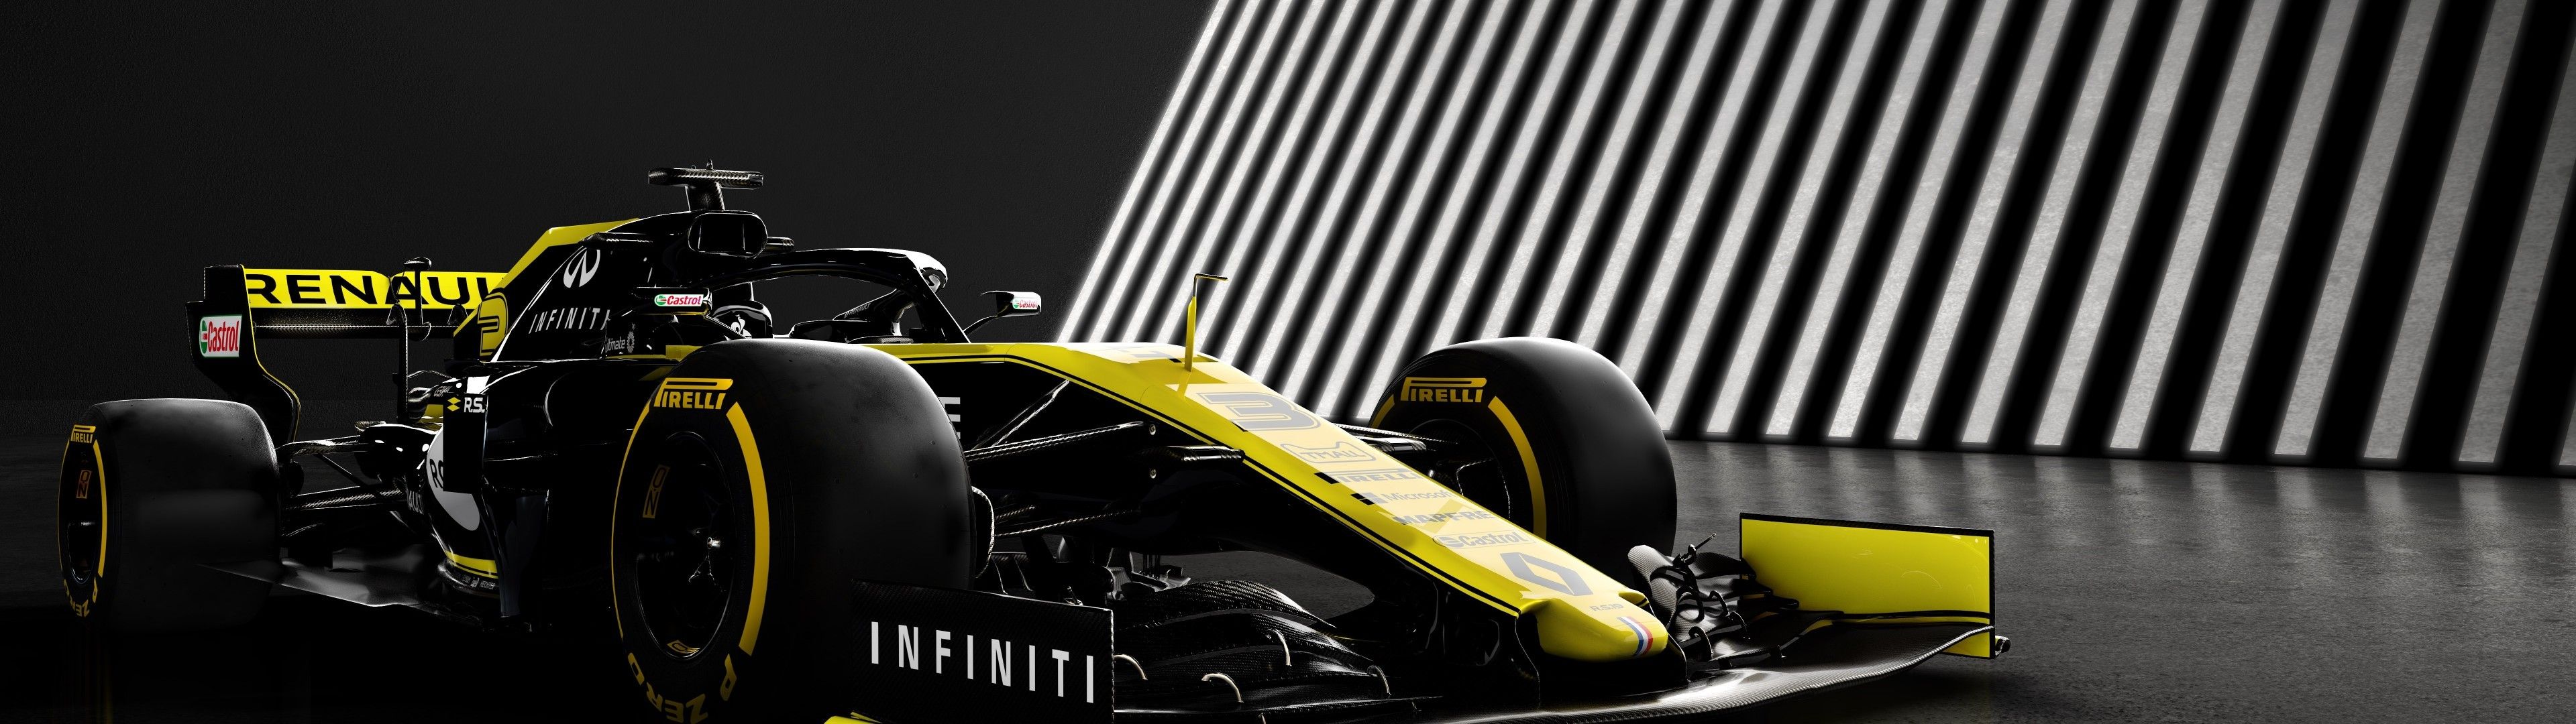 Download 3840x1080 Formula Renault Rs Racing Cars, Yellow Wallpaper